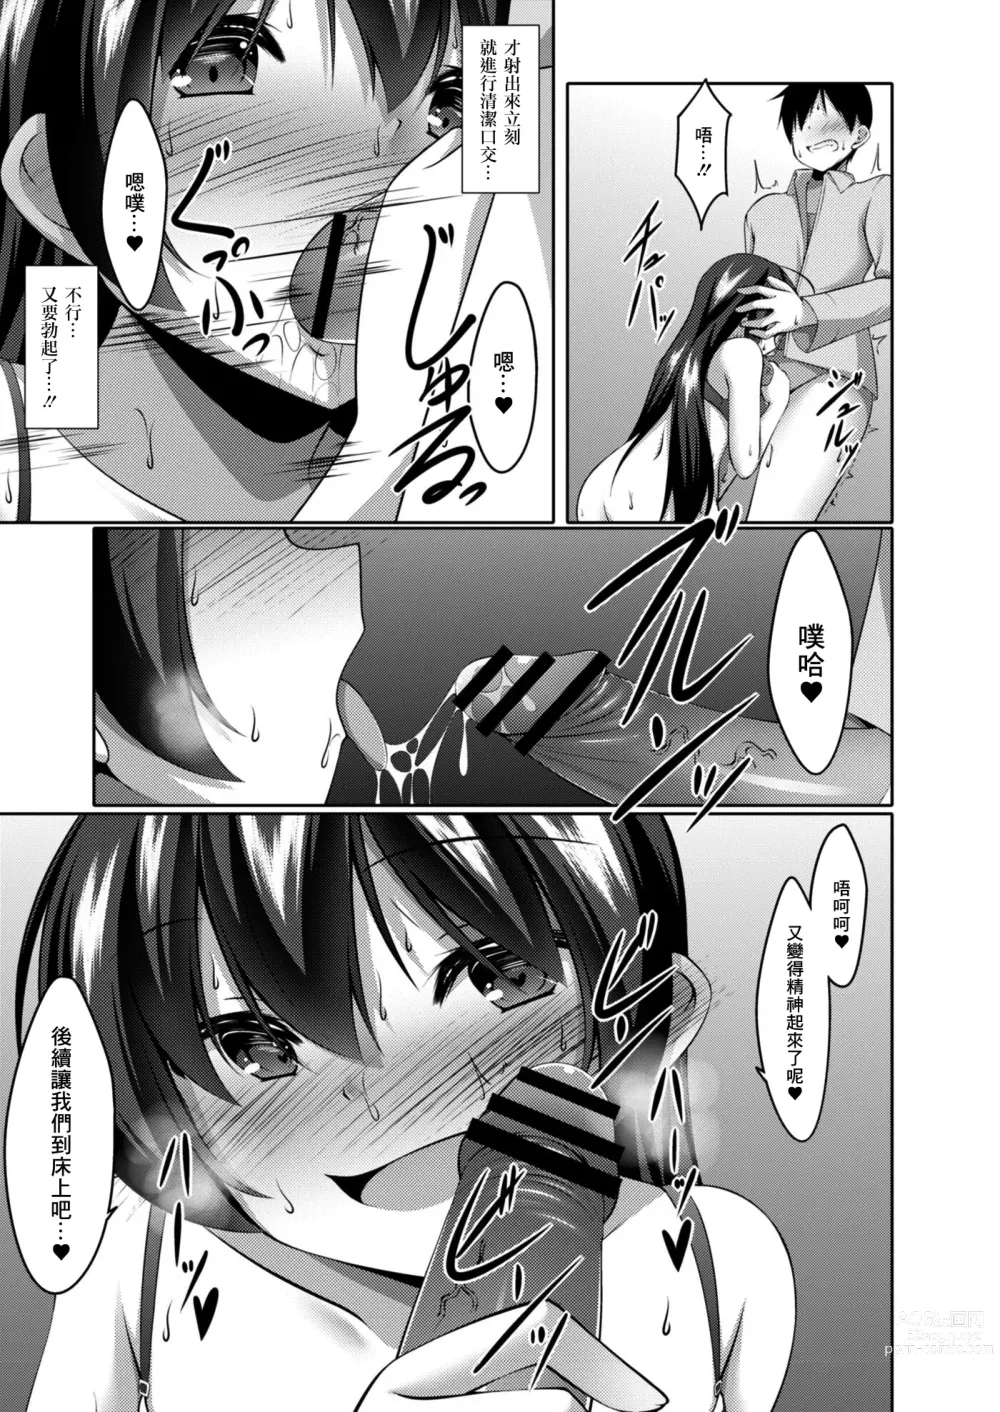 Page 9 of manga  從網遊開始的炮友關係  后編